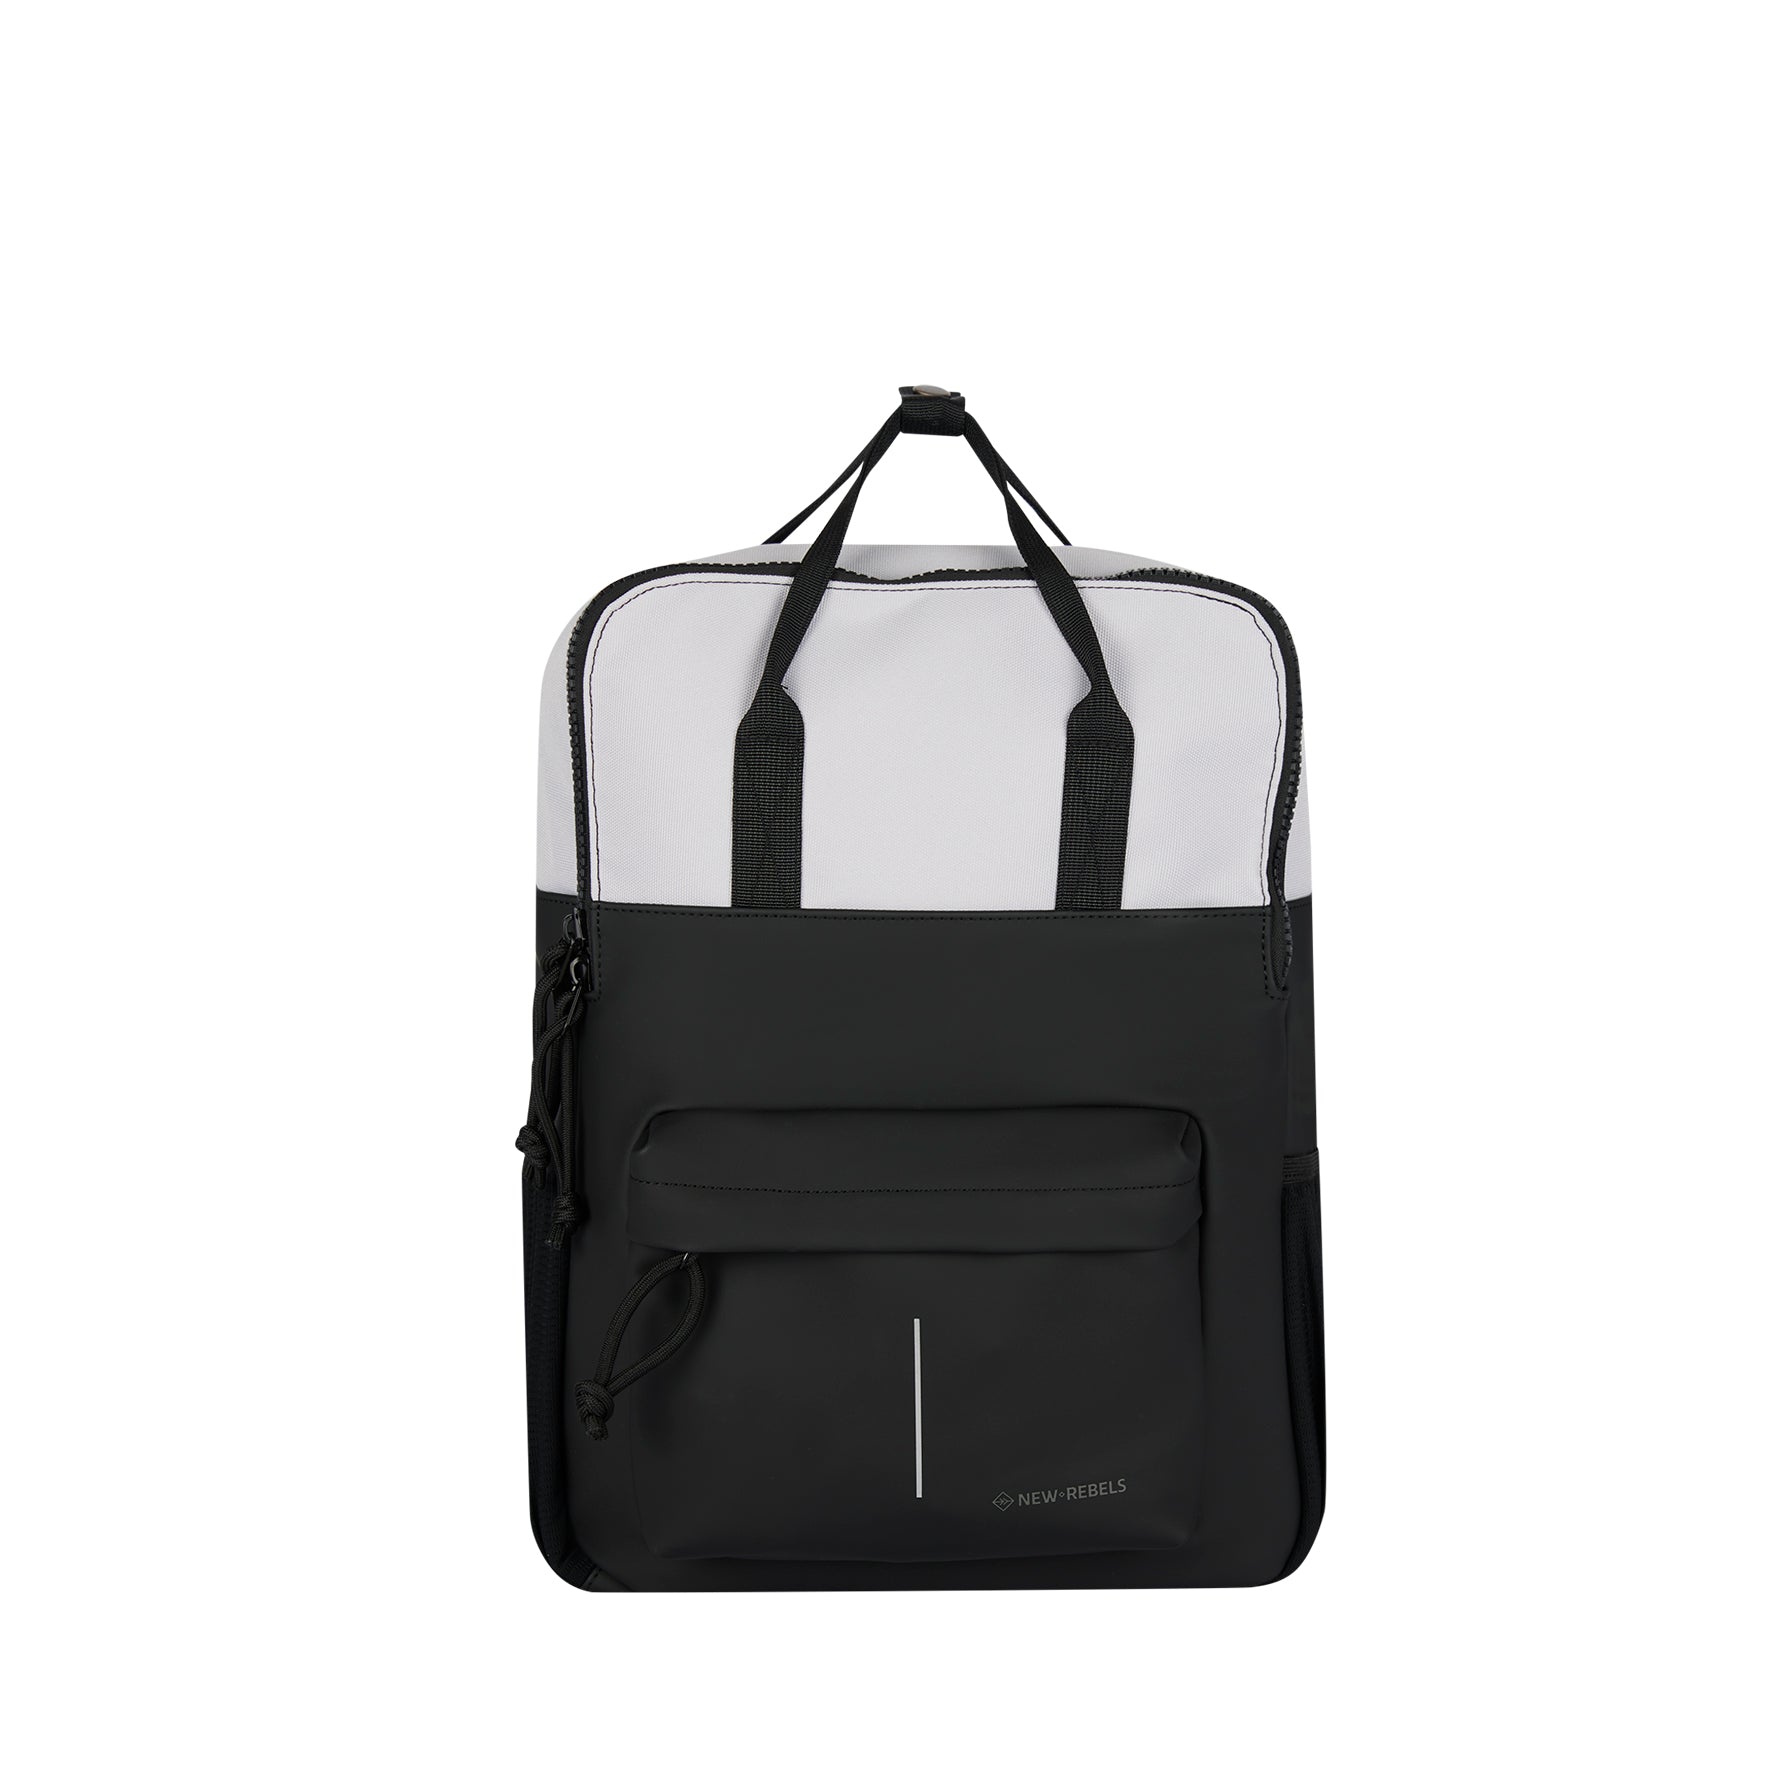 Backpack 'Springfield' black/grey